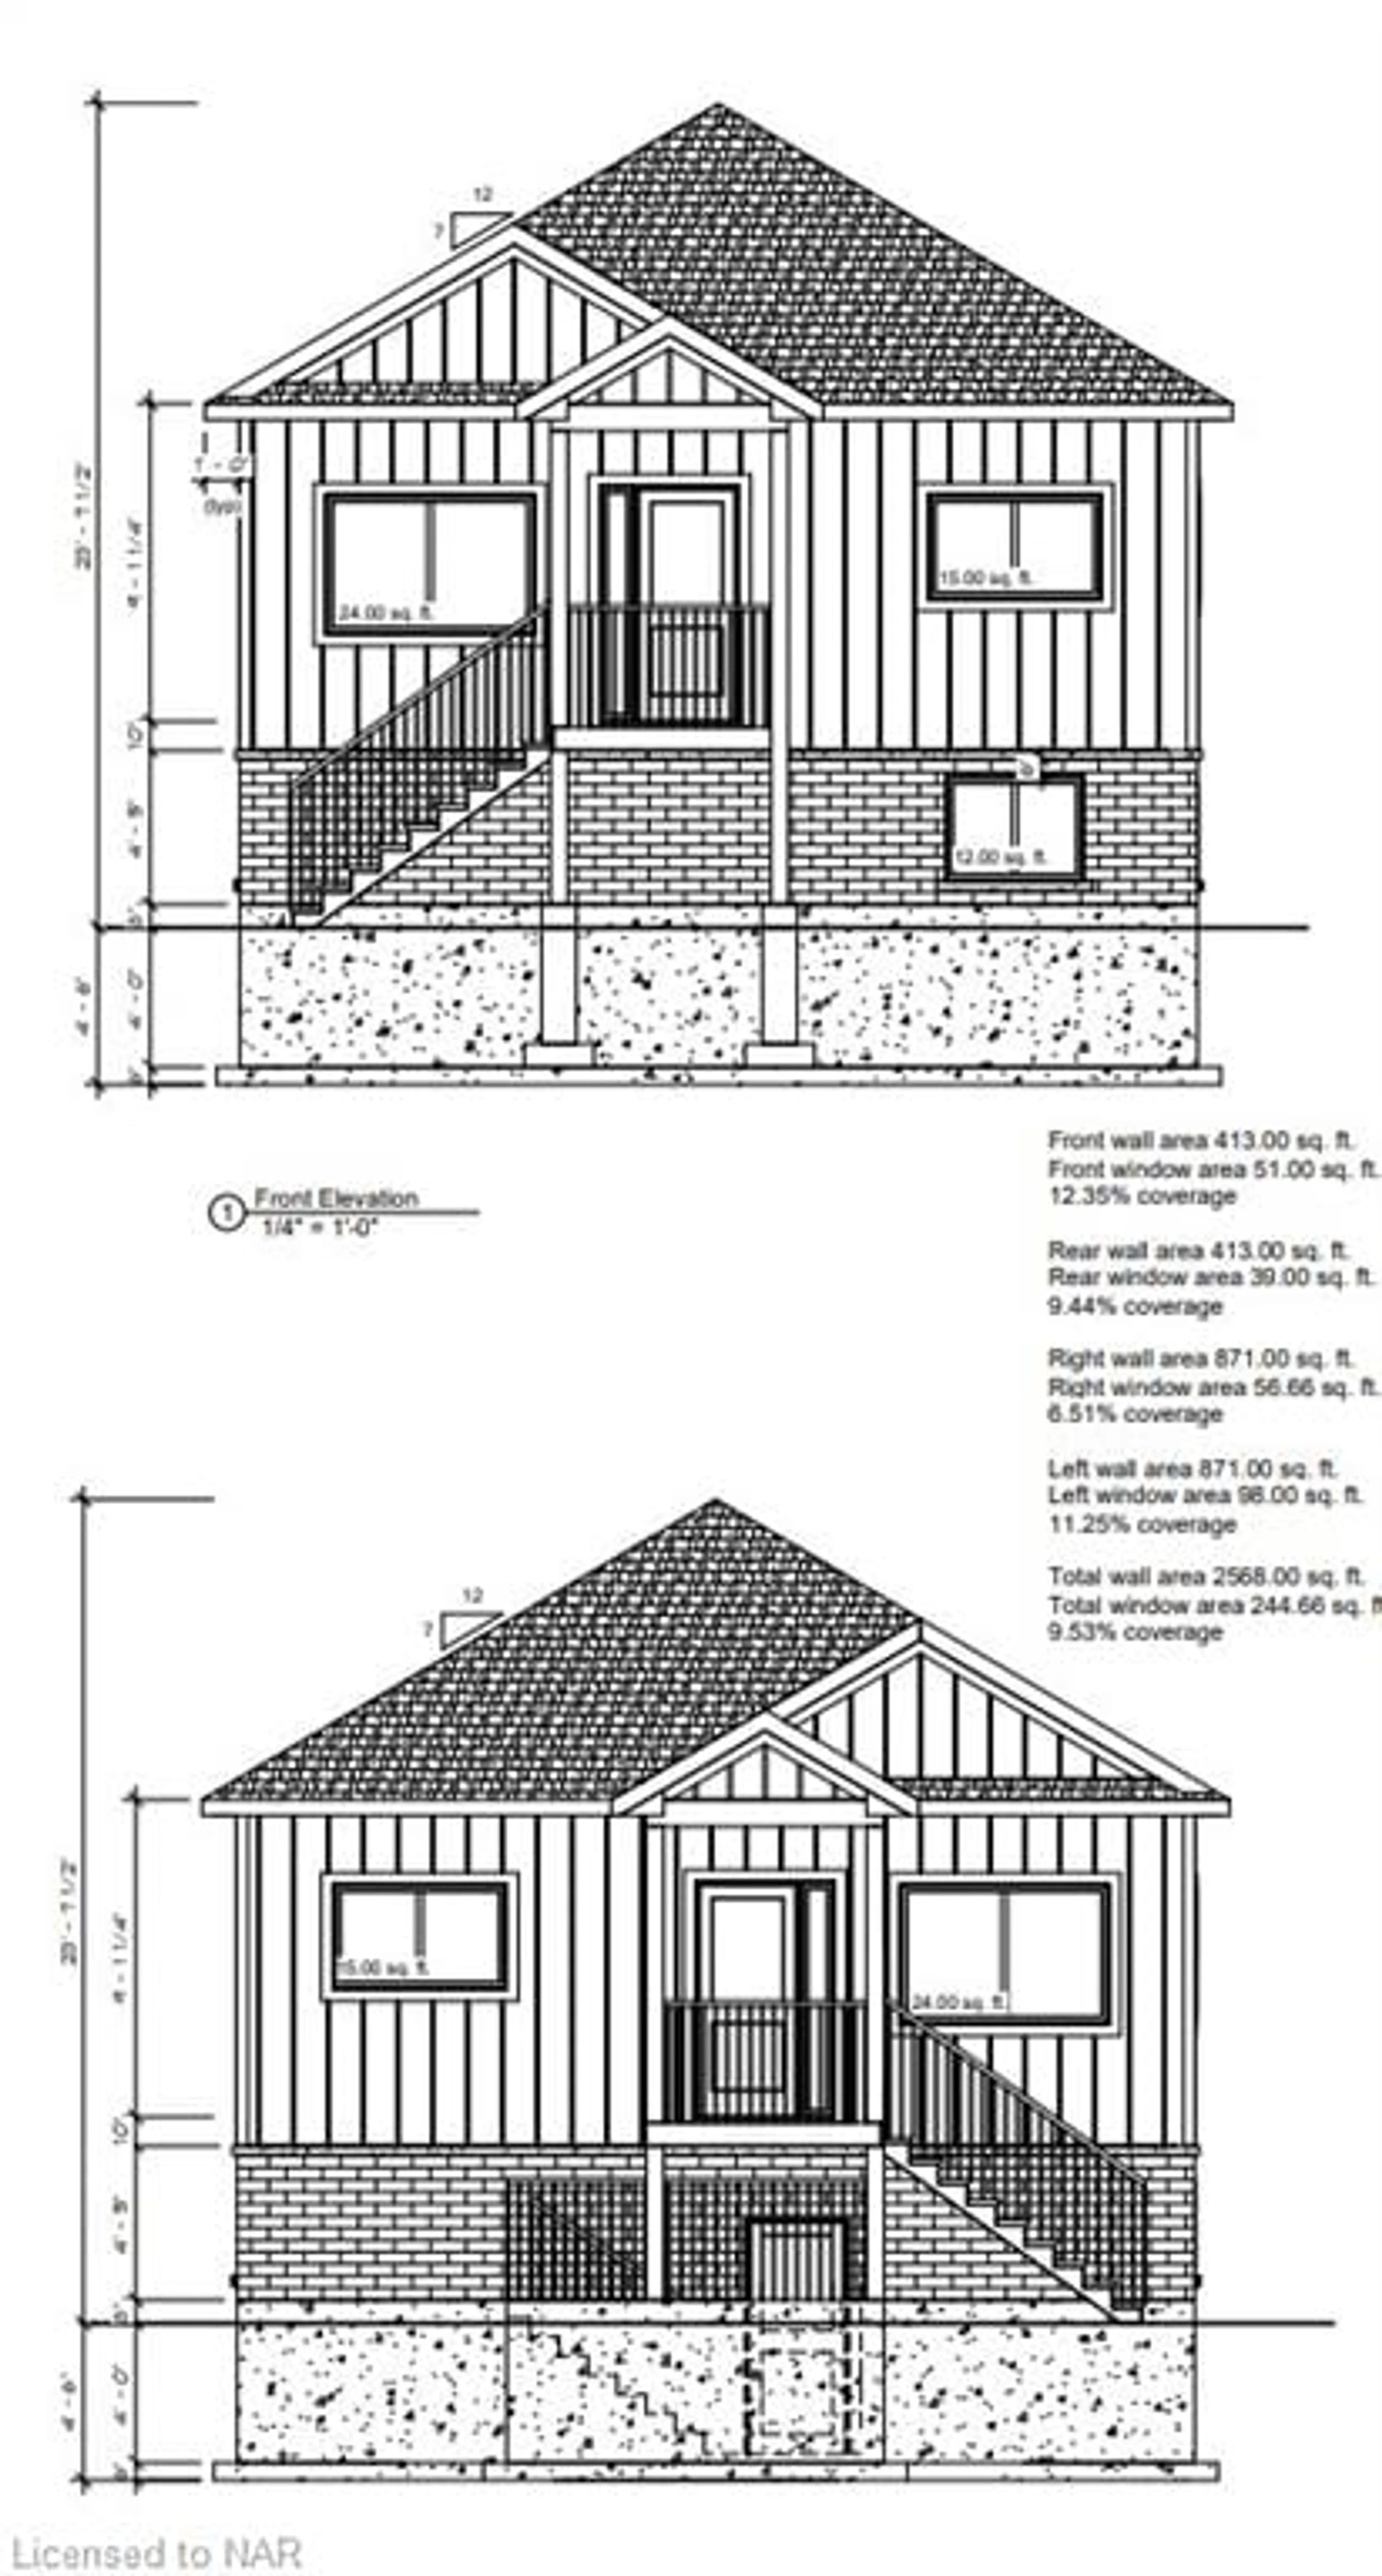 Floor plan for 601 Wright St, Welland Ontario L3B 2K8